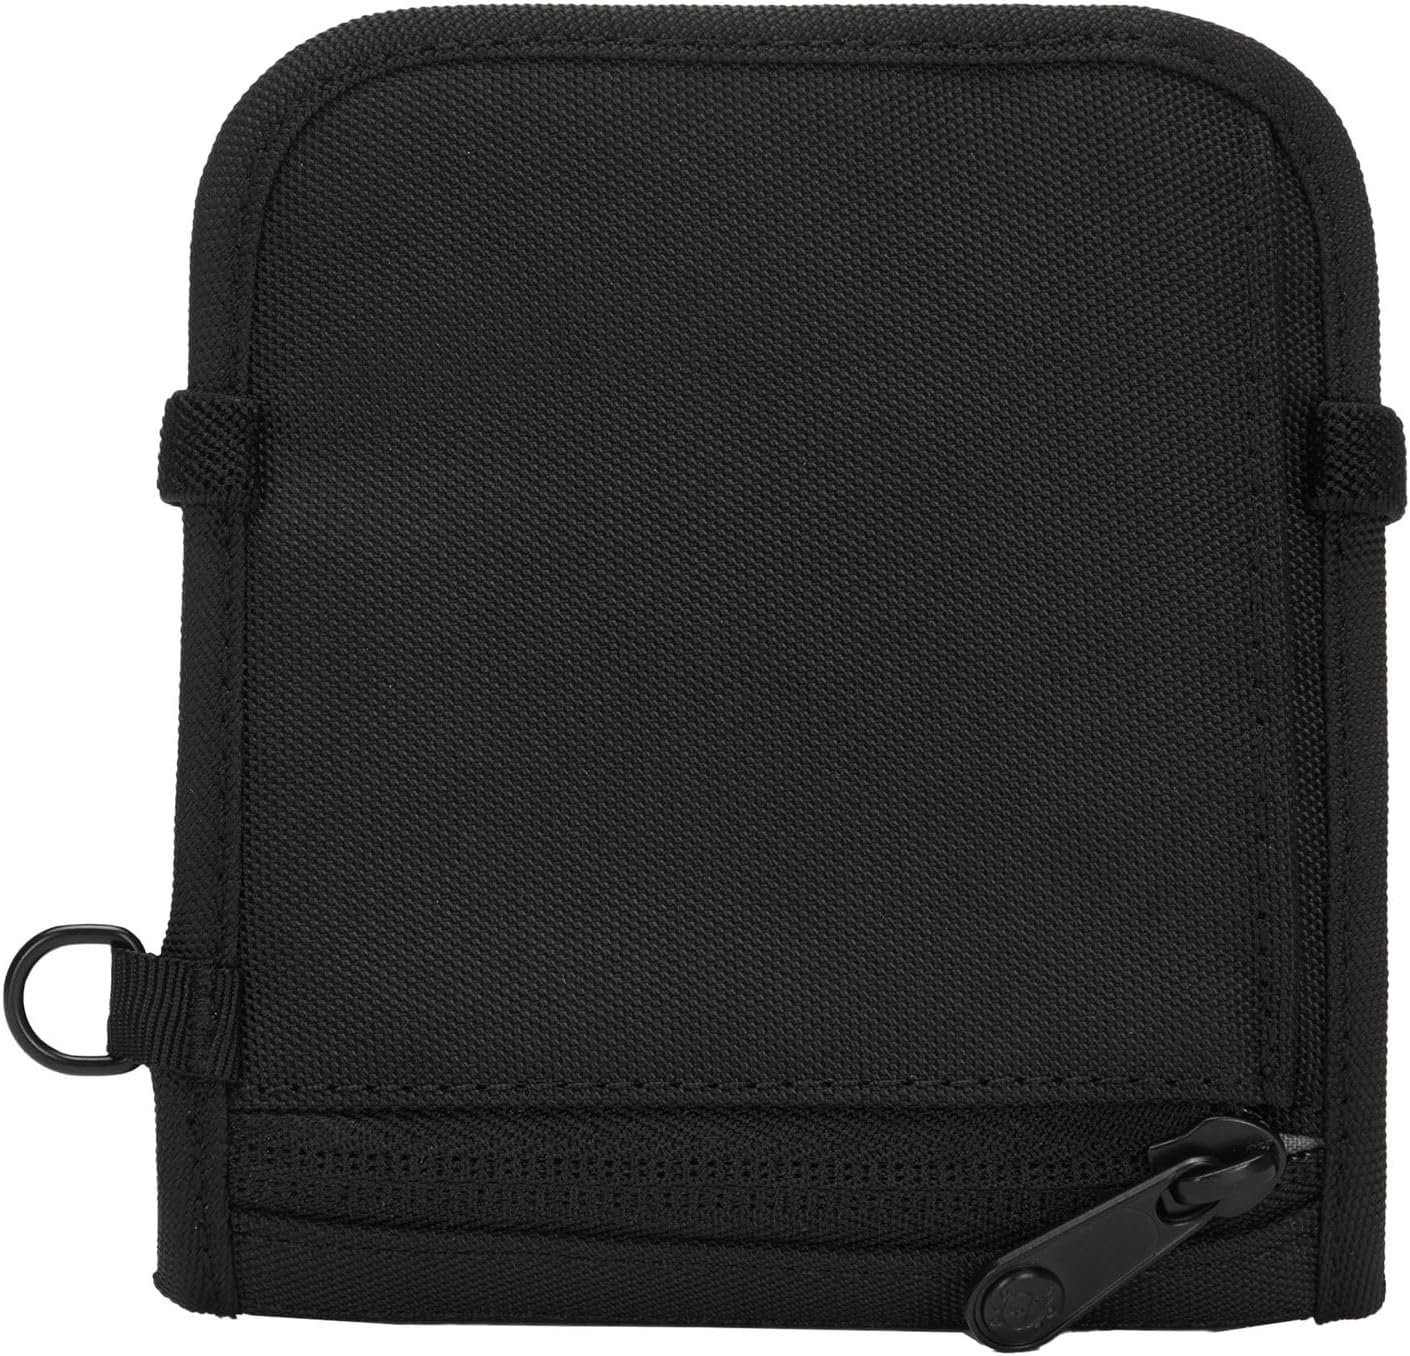 Pacsafe Rfidsafe V100 Anti-theft Blocking Bi-Fold Wallet, Black Review